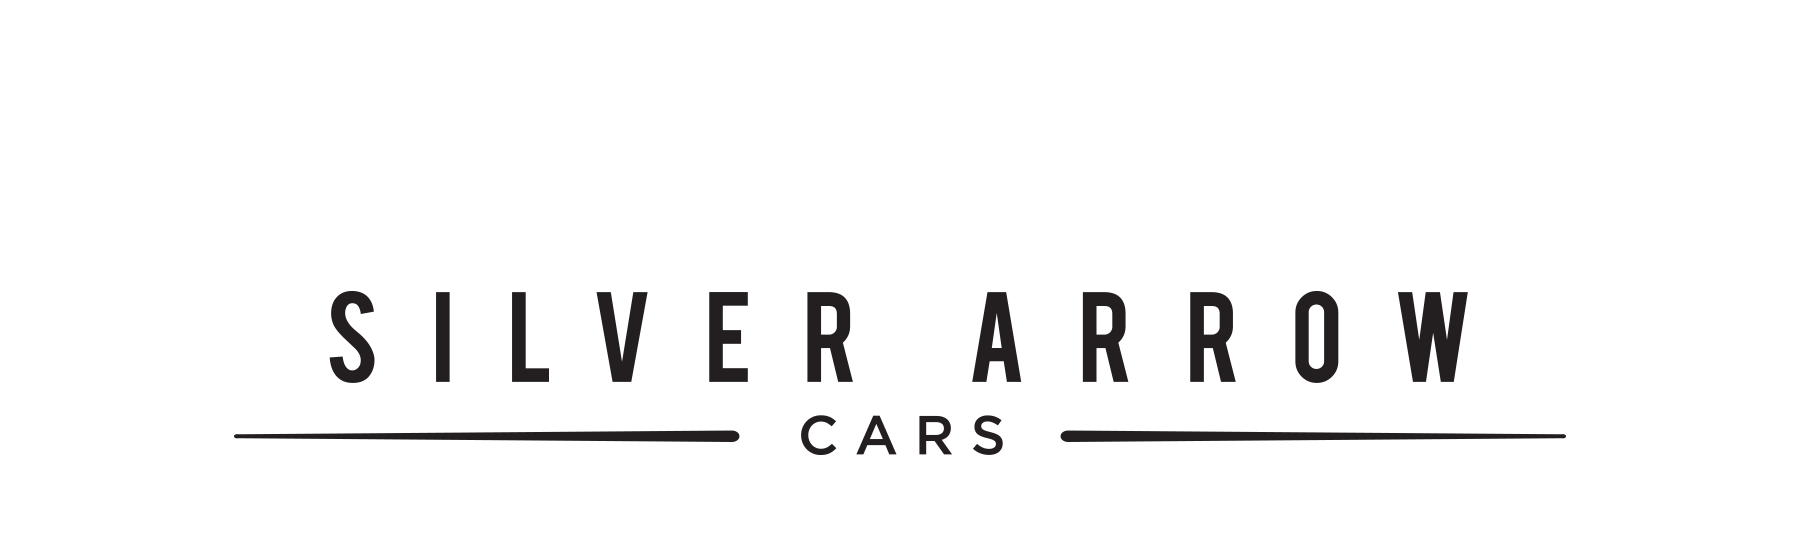 Silver Arrows Logo - Silver Arrow Cars Ltd. Premium Auto Dealership & Broker. Victoria, BC